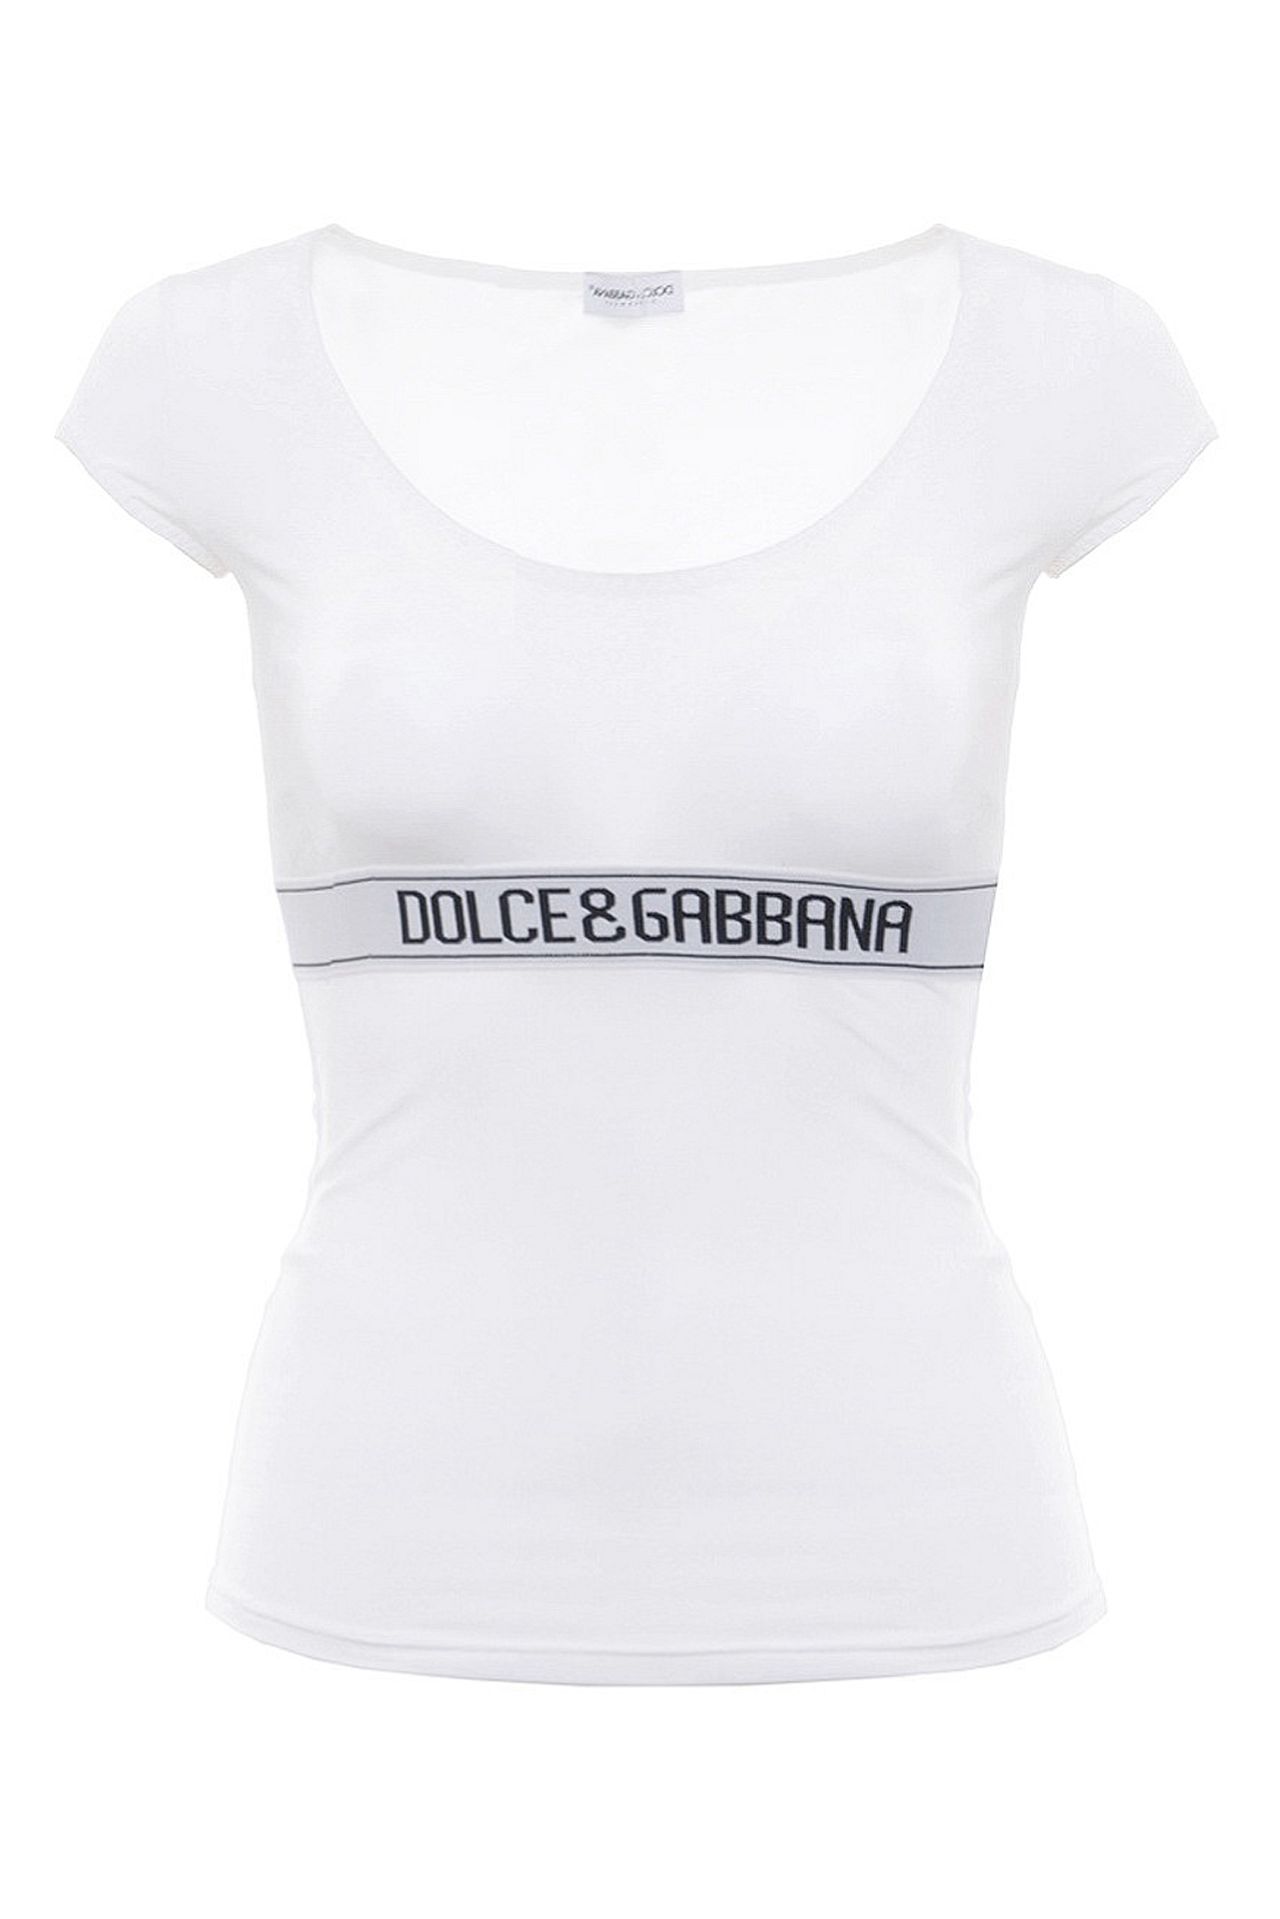 Одежда женская Футболка DOLCE & GABBANA (N7MD50O1610/14.3). Купить за 7500 руб.